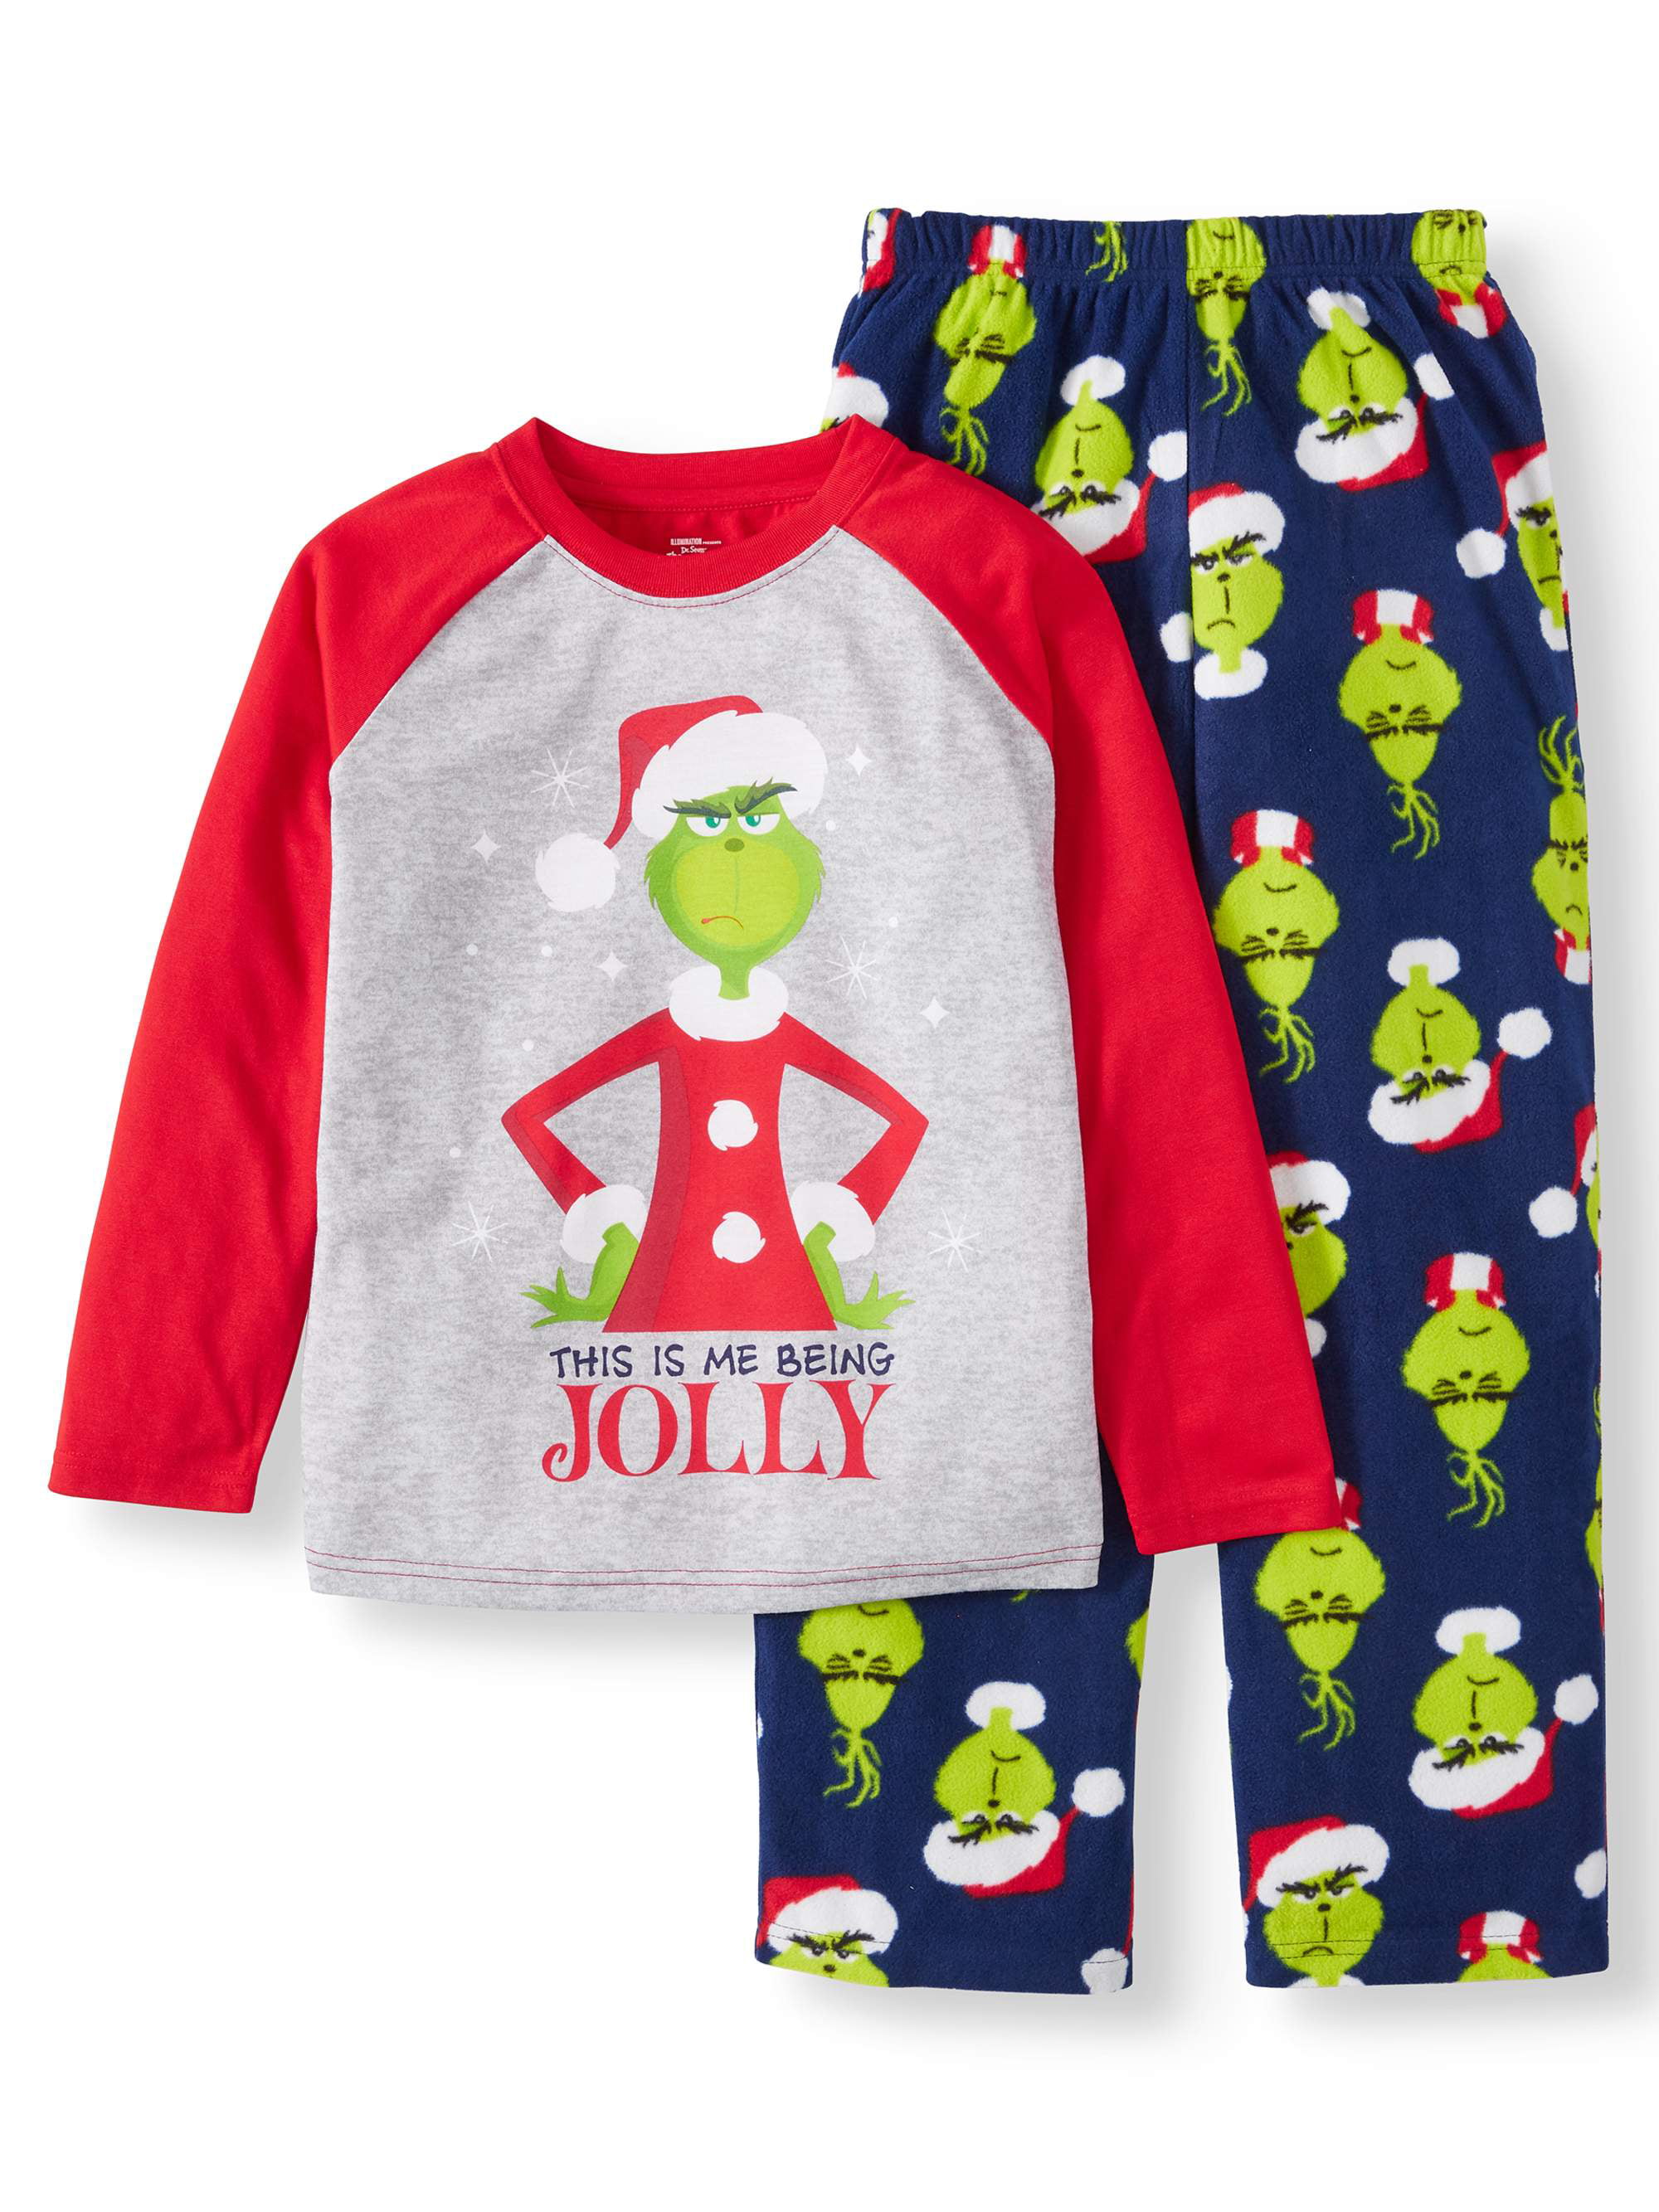 Seuss The Grinch Pajamas Set Shirt Pants Boy Girl 10 12 L Christmas NWT Kids Dr 